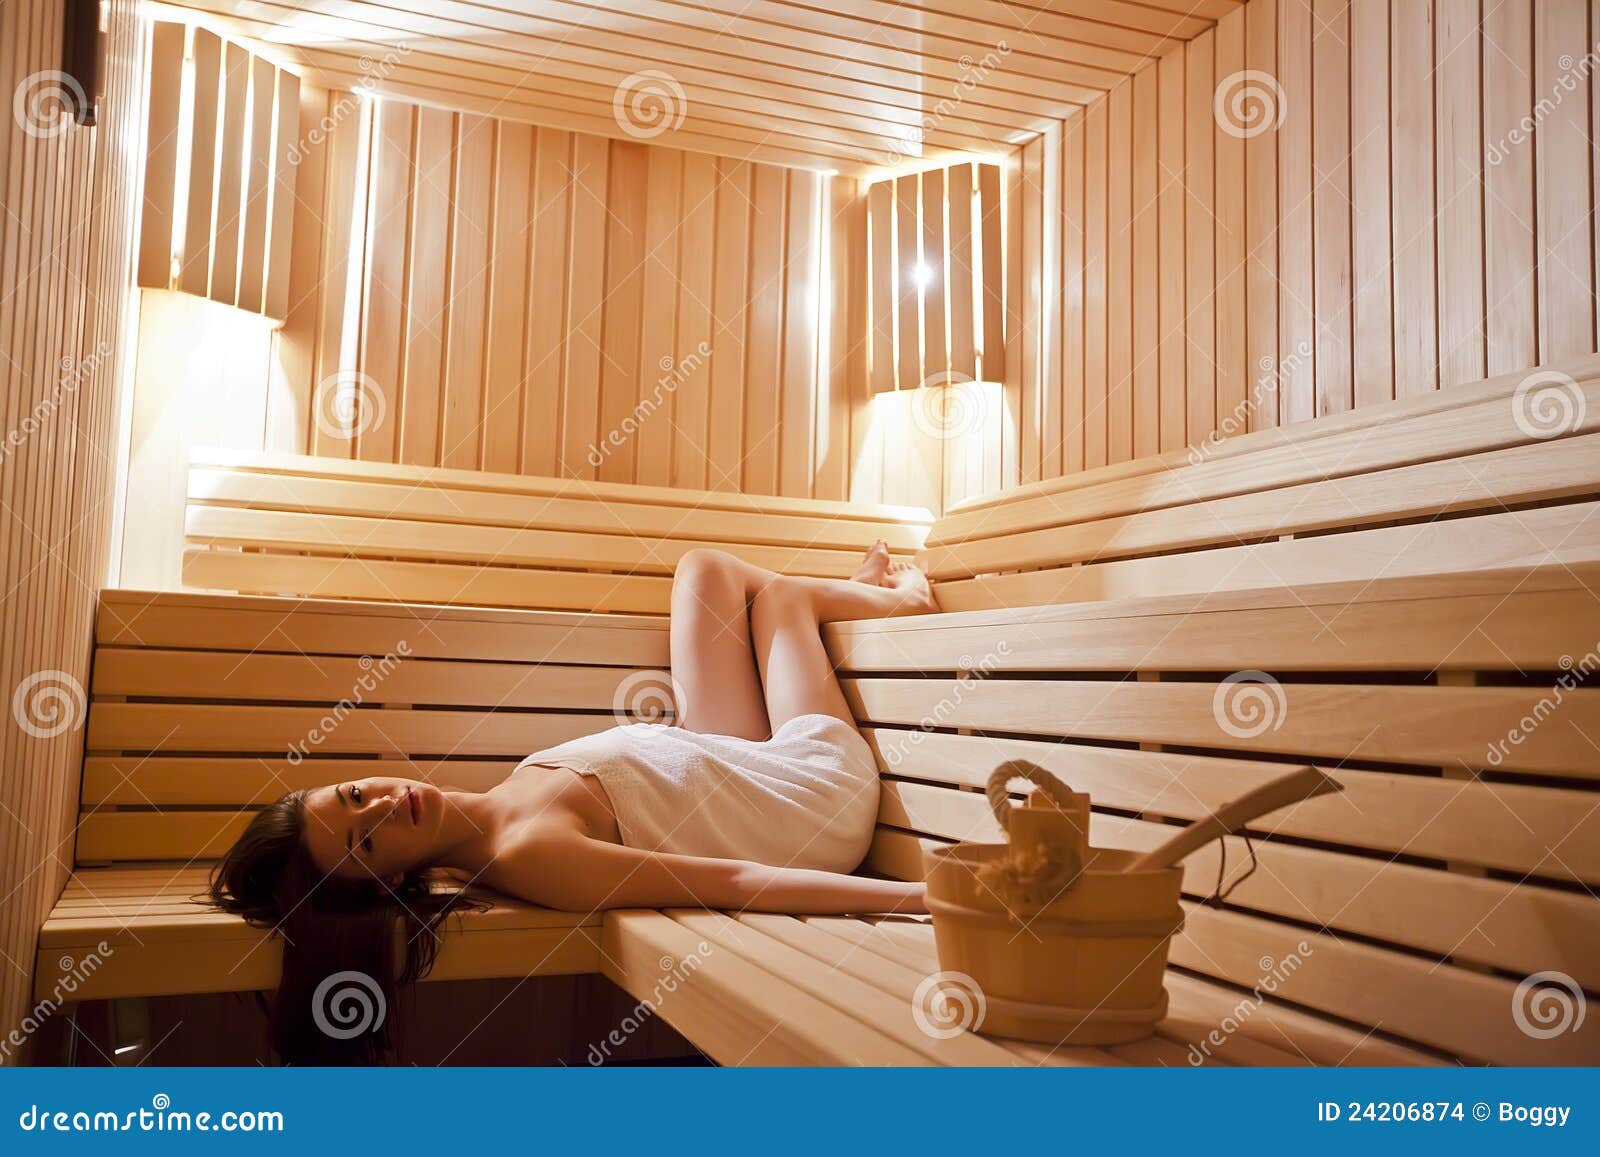 Girl in sauna stock photo. Image of lifestyles, heat - 24206874